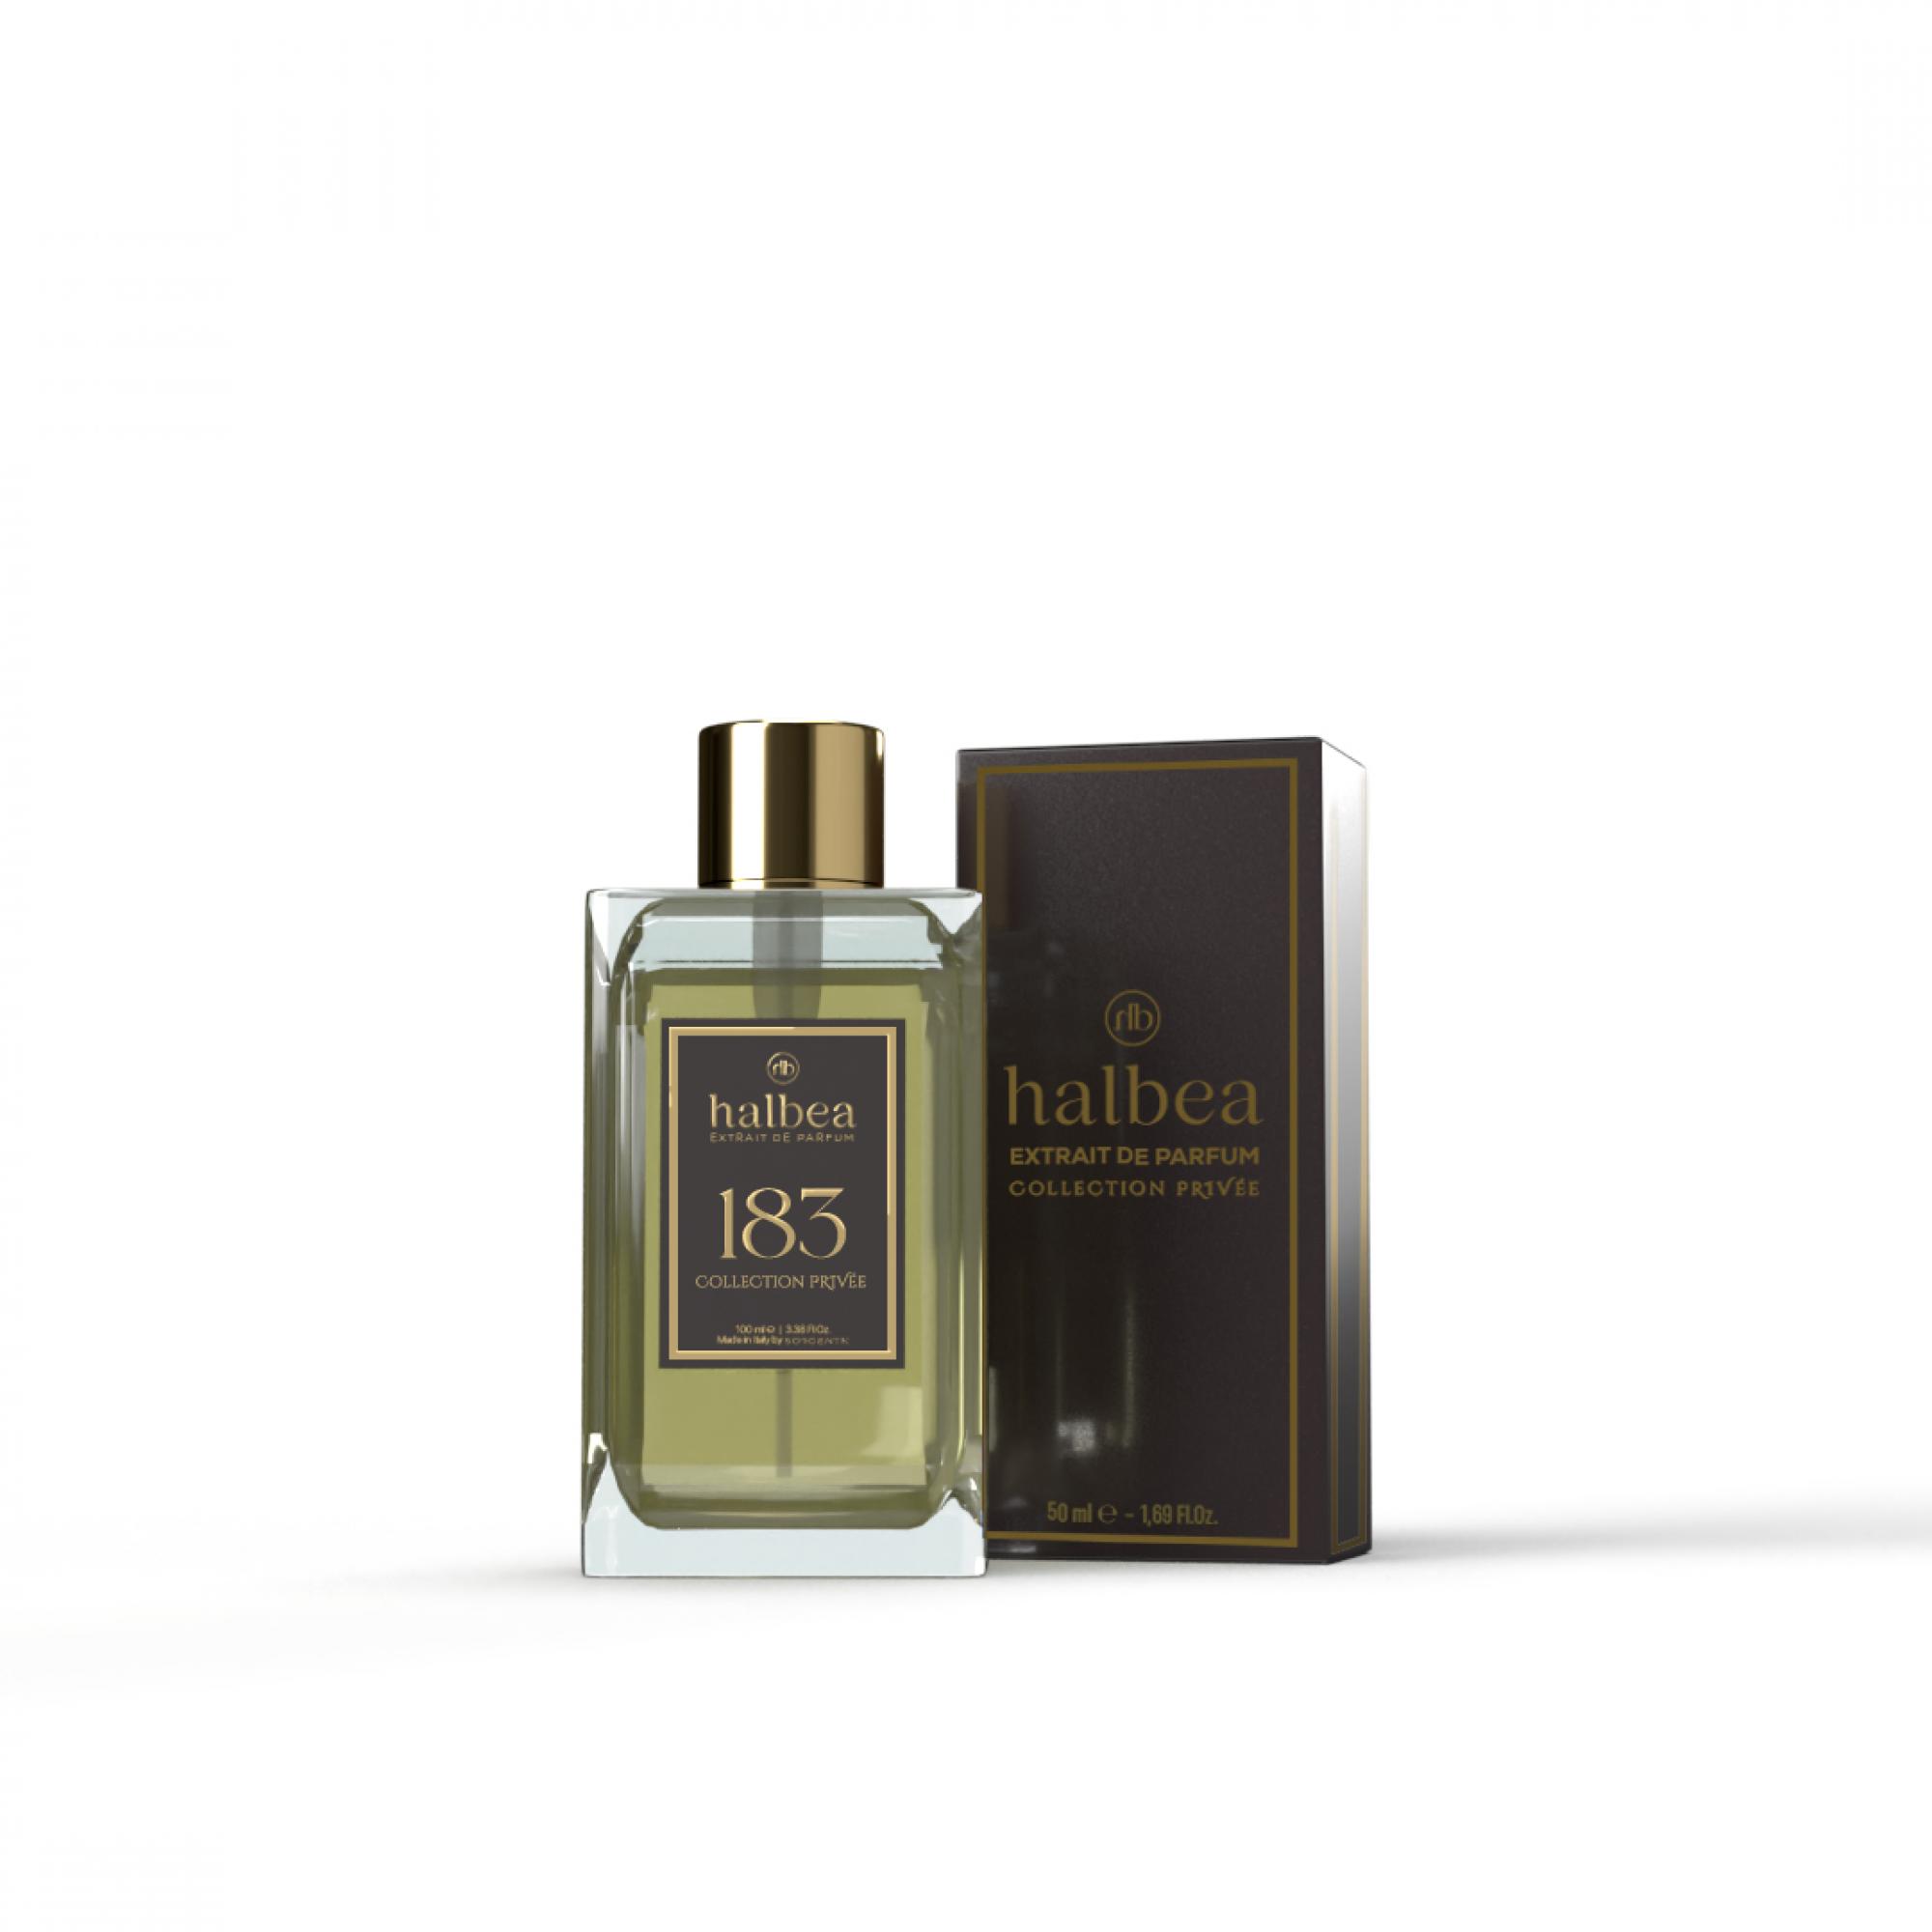 Halbea Parfum Nr. 183 insp. by Morph Zeta Intense 50ml